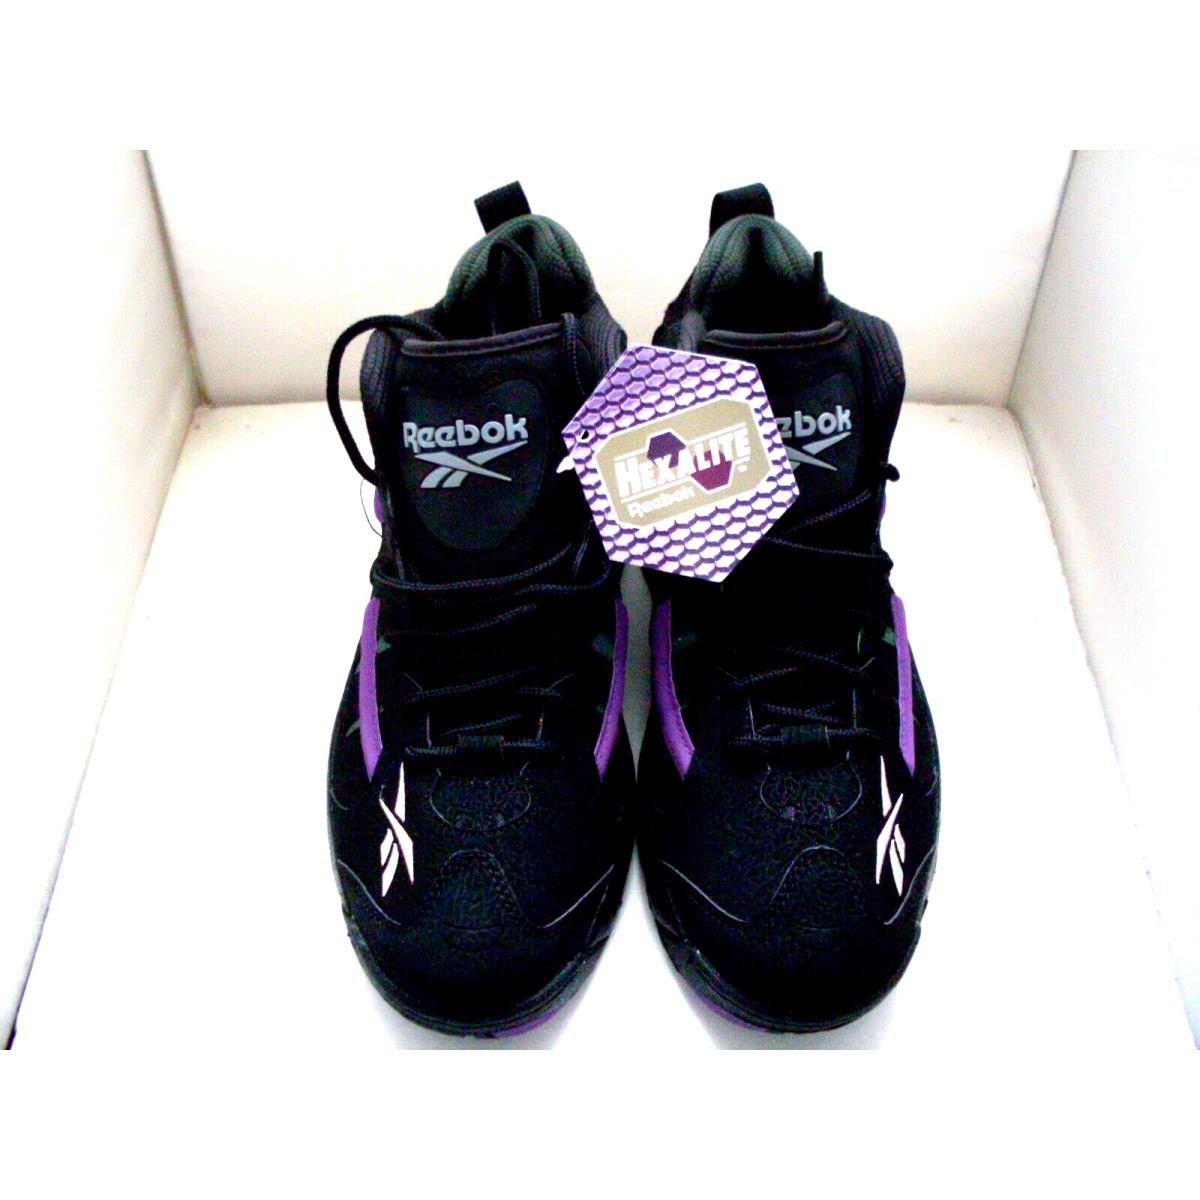 Reebok The Rail Bucks Glenn Robinson Basketball Shoes Black Purple Size 9 2014